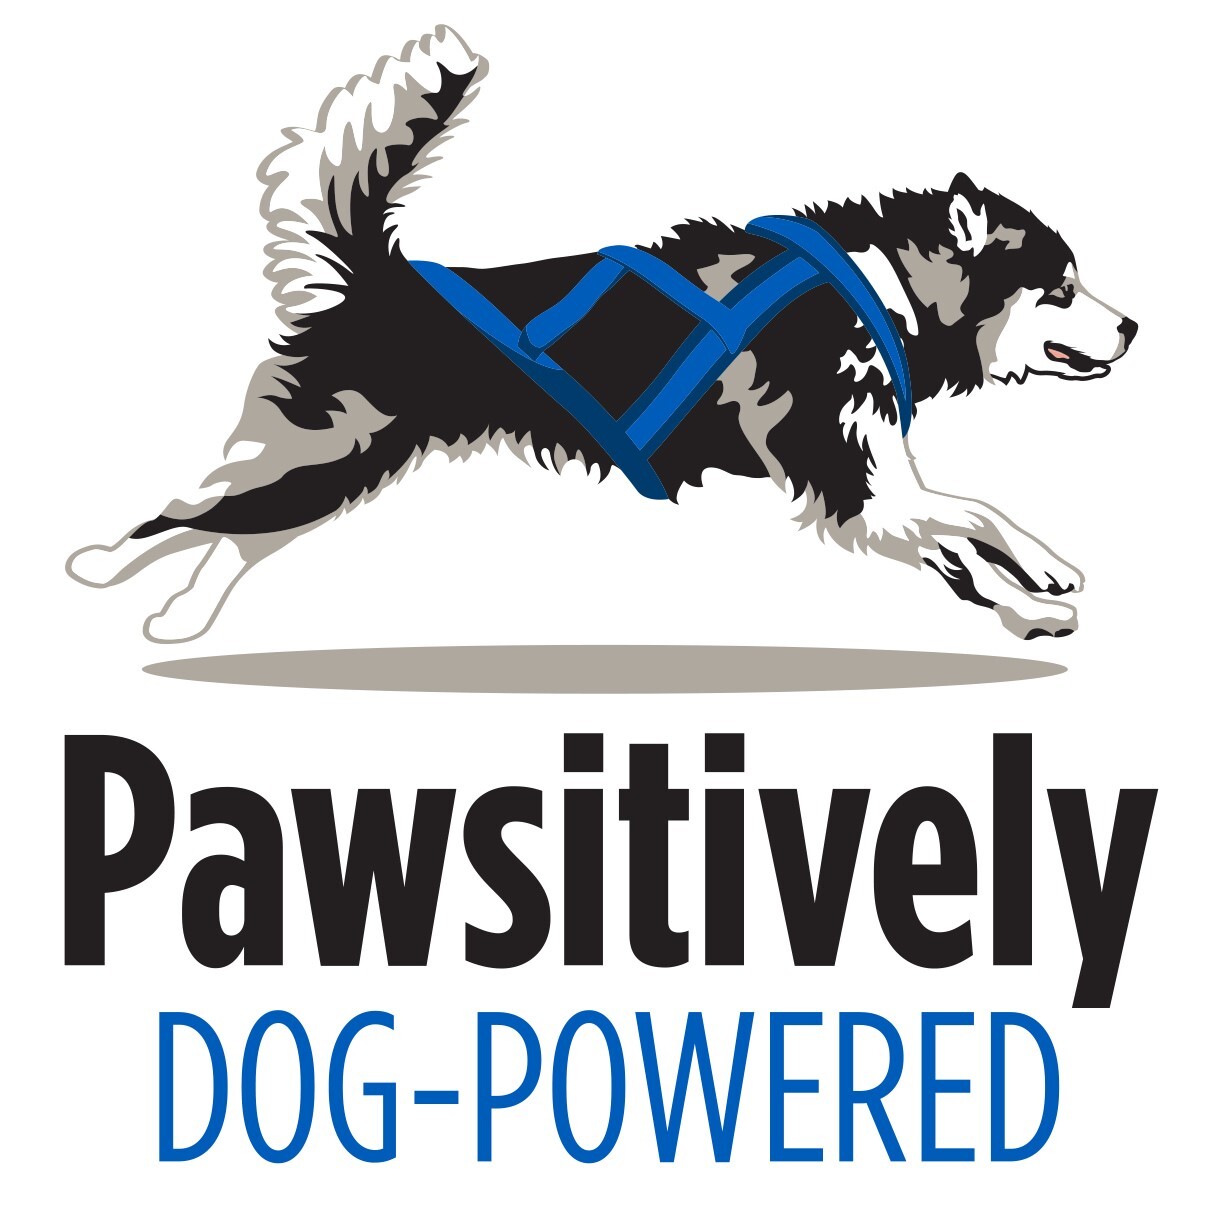 Pawsitively Dog-Powered